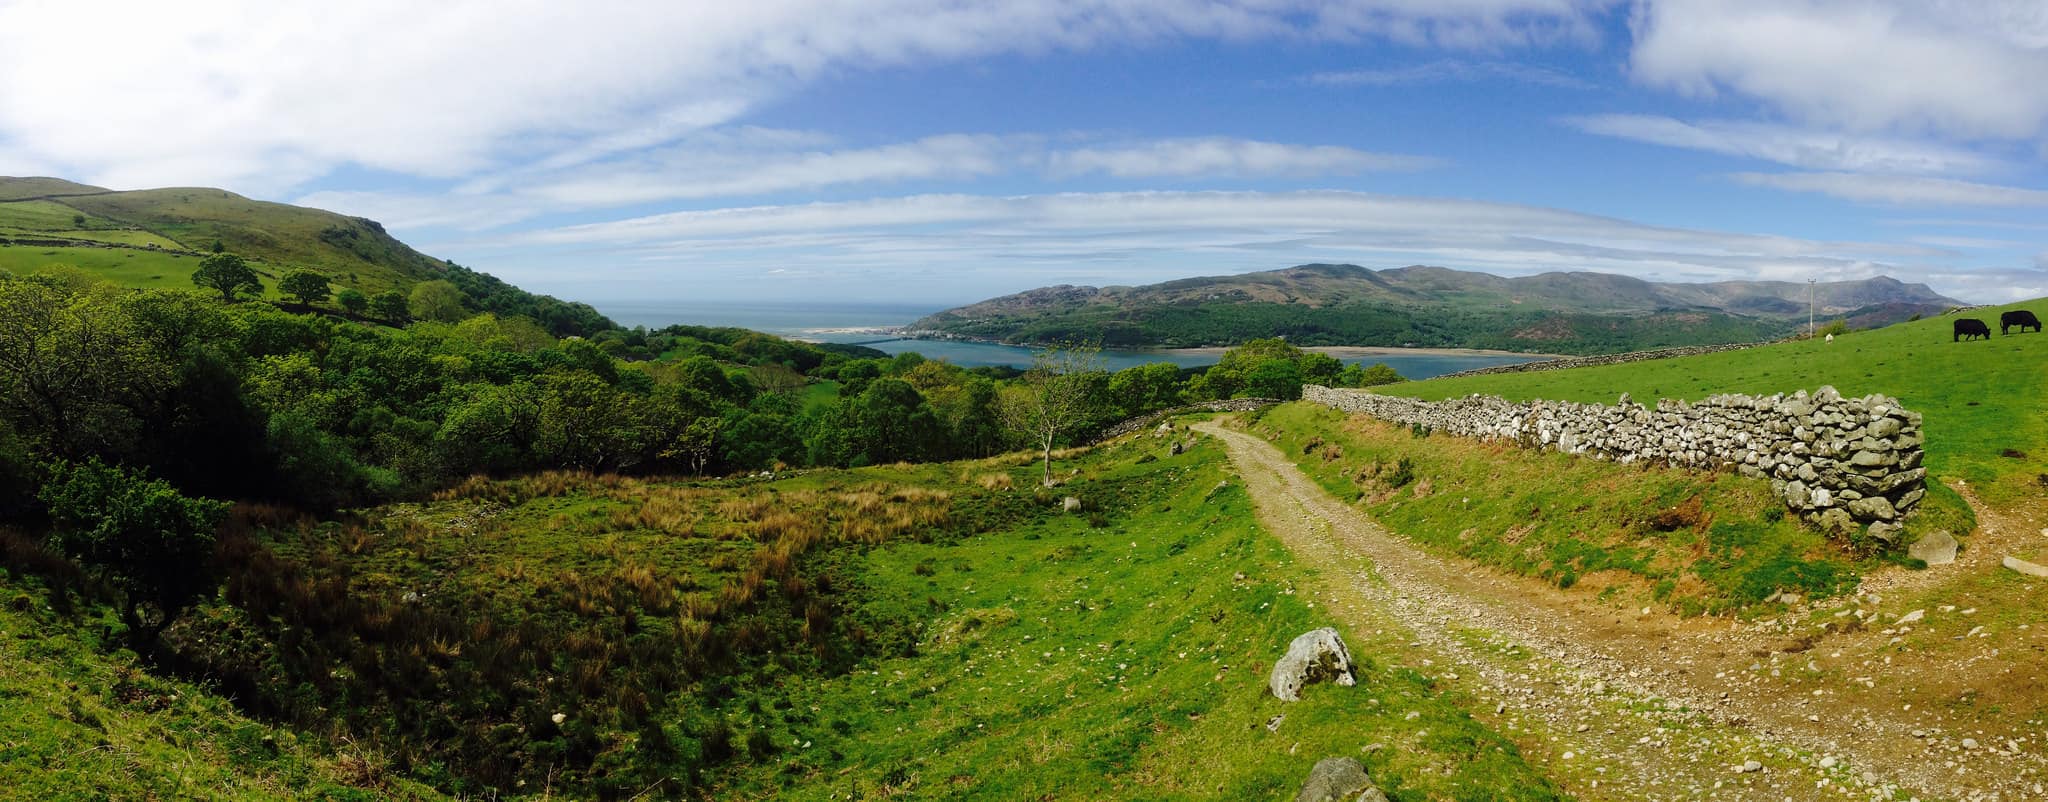 View over the Meirionnydd Coastal Path